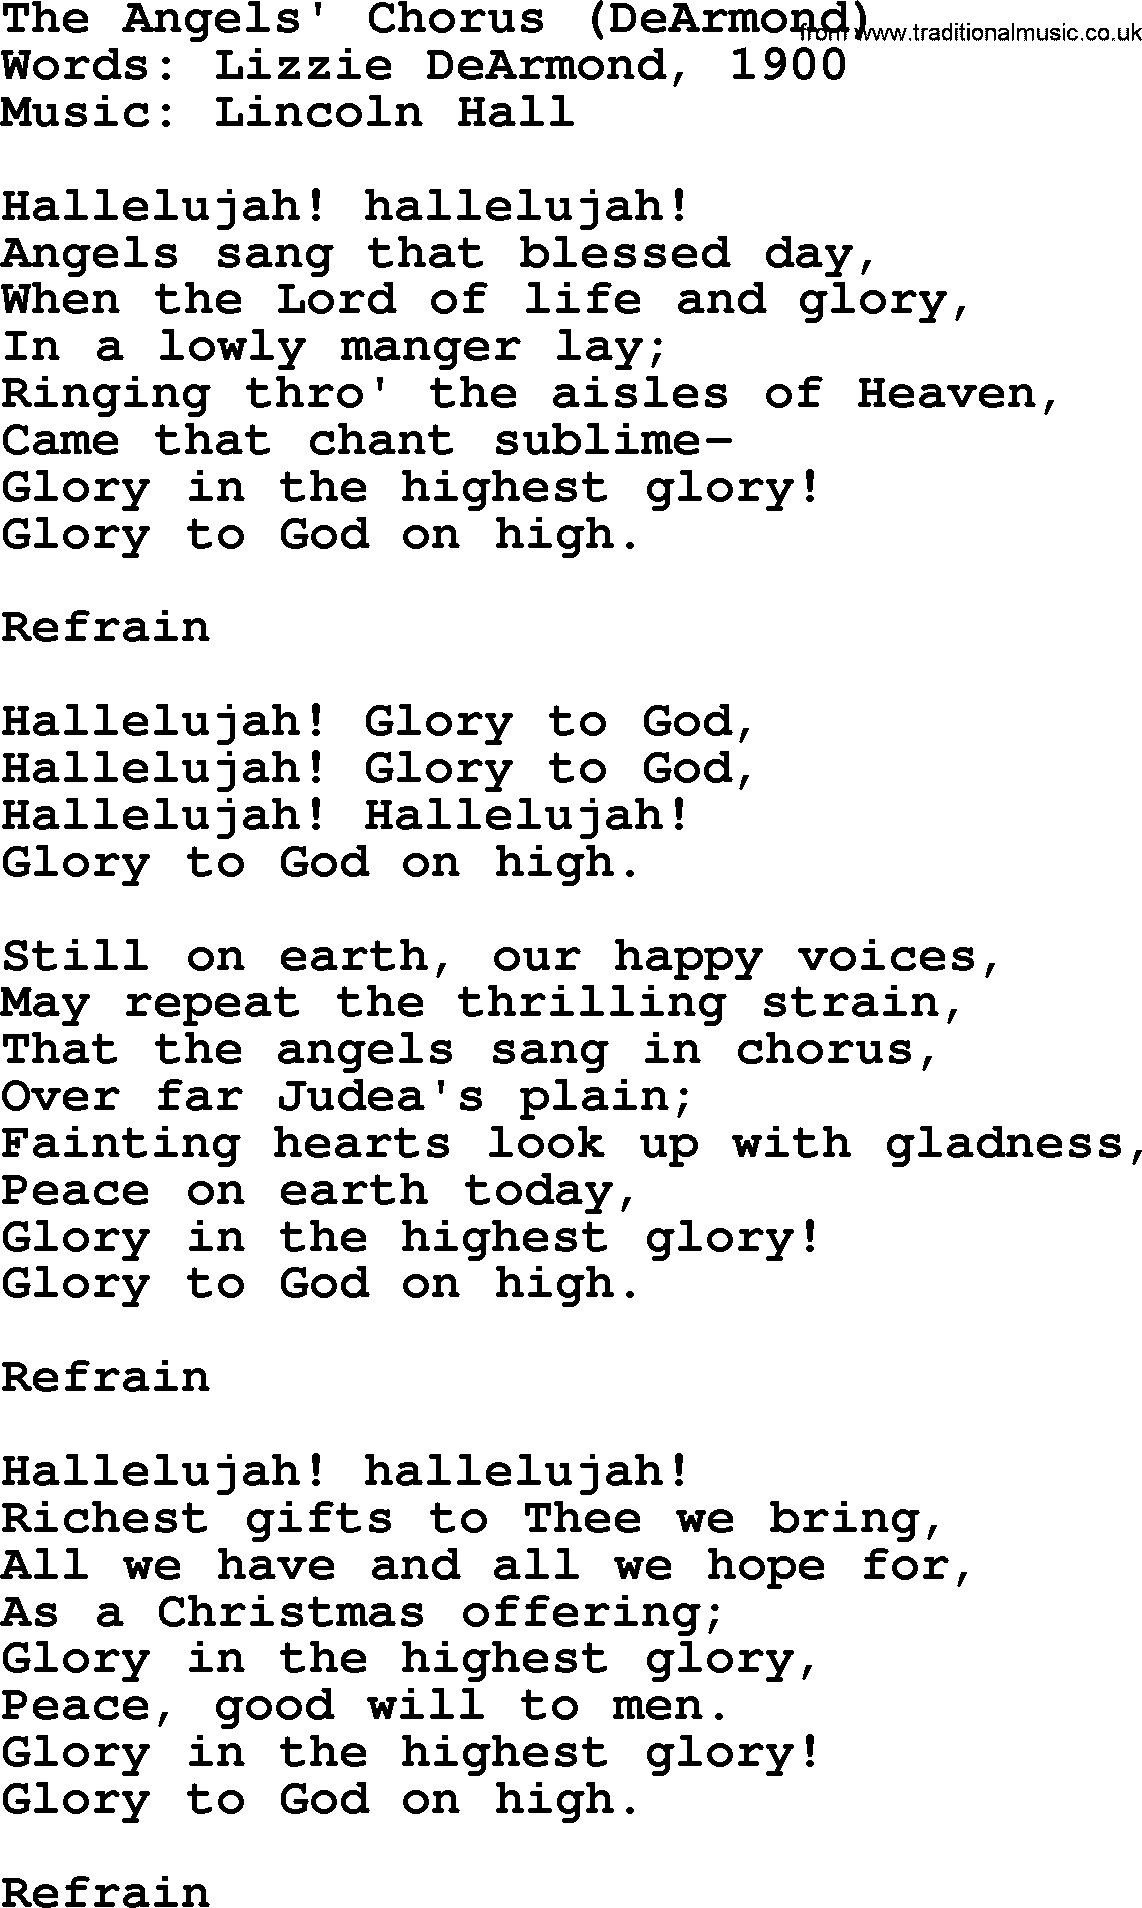 Hymns about Angels, Hymn: The Angels' Chorus (dearmond).txt lyrics with PDF